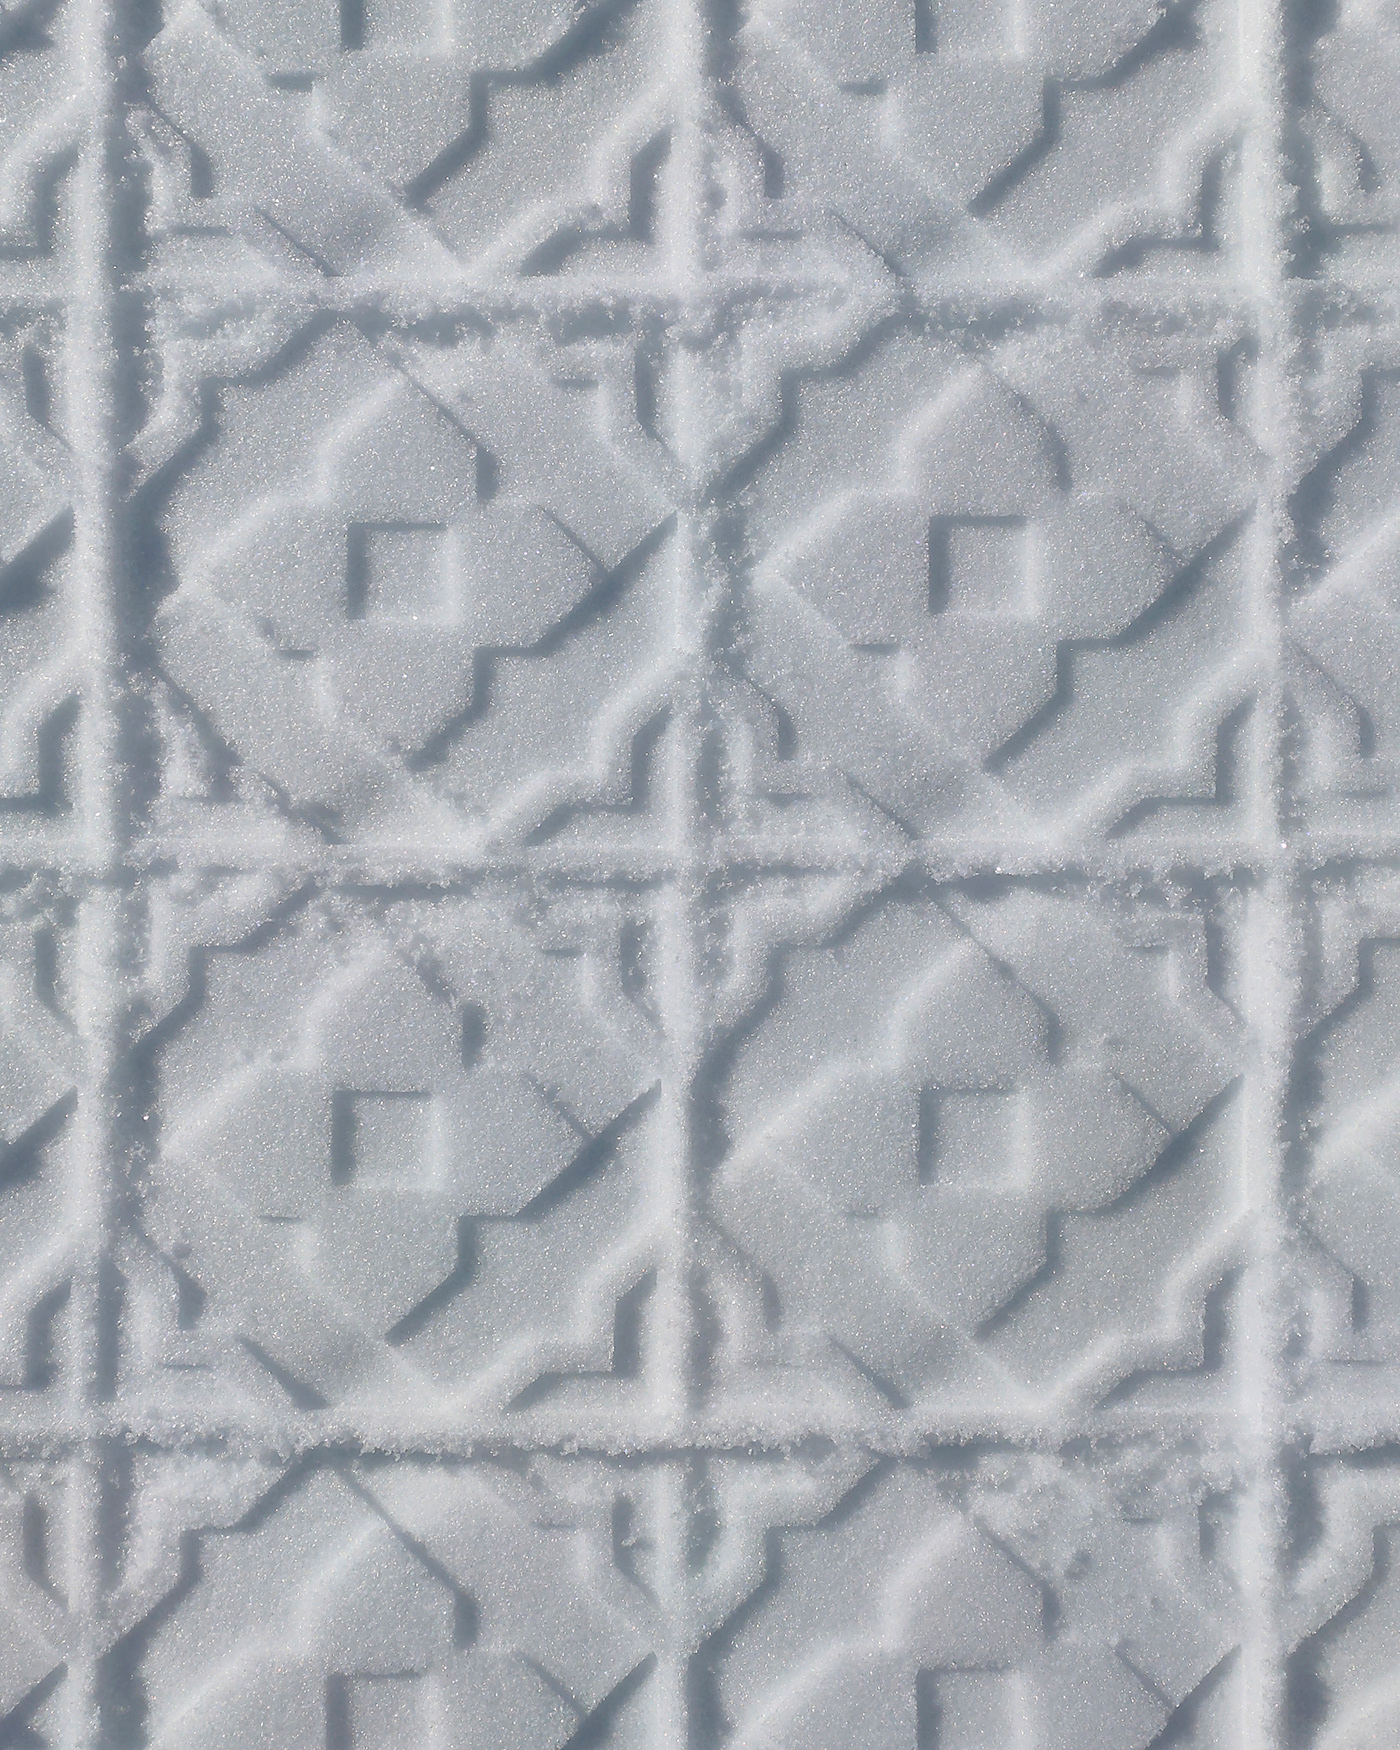 FLOOR land art pattern sculpture snow tiles